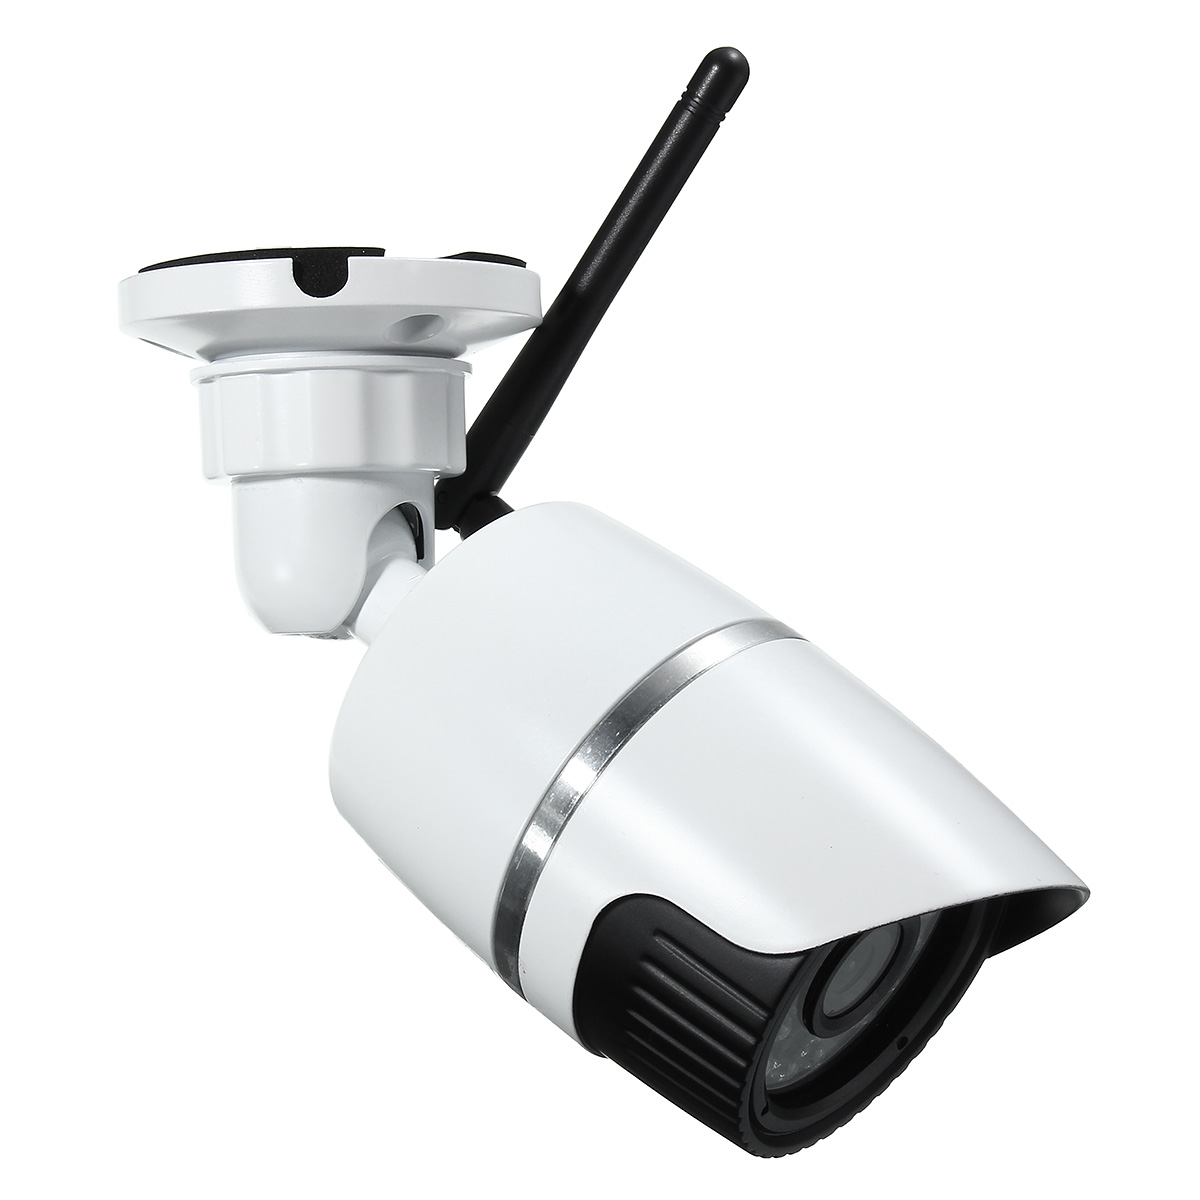 Waterproof-HD-1280720P-36mm-Wifi-CCTV-Digital-Video-Camera-Outdoor-Security-Camera-1127167